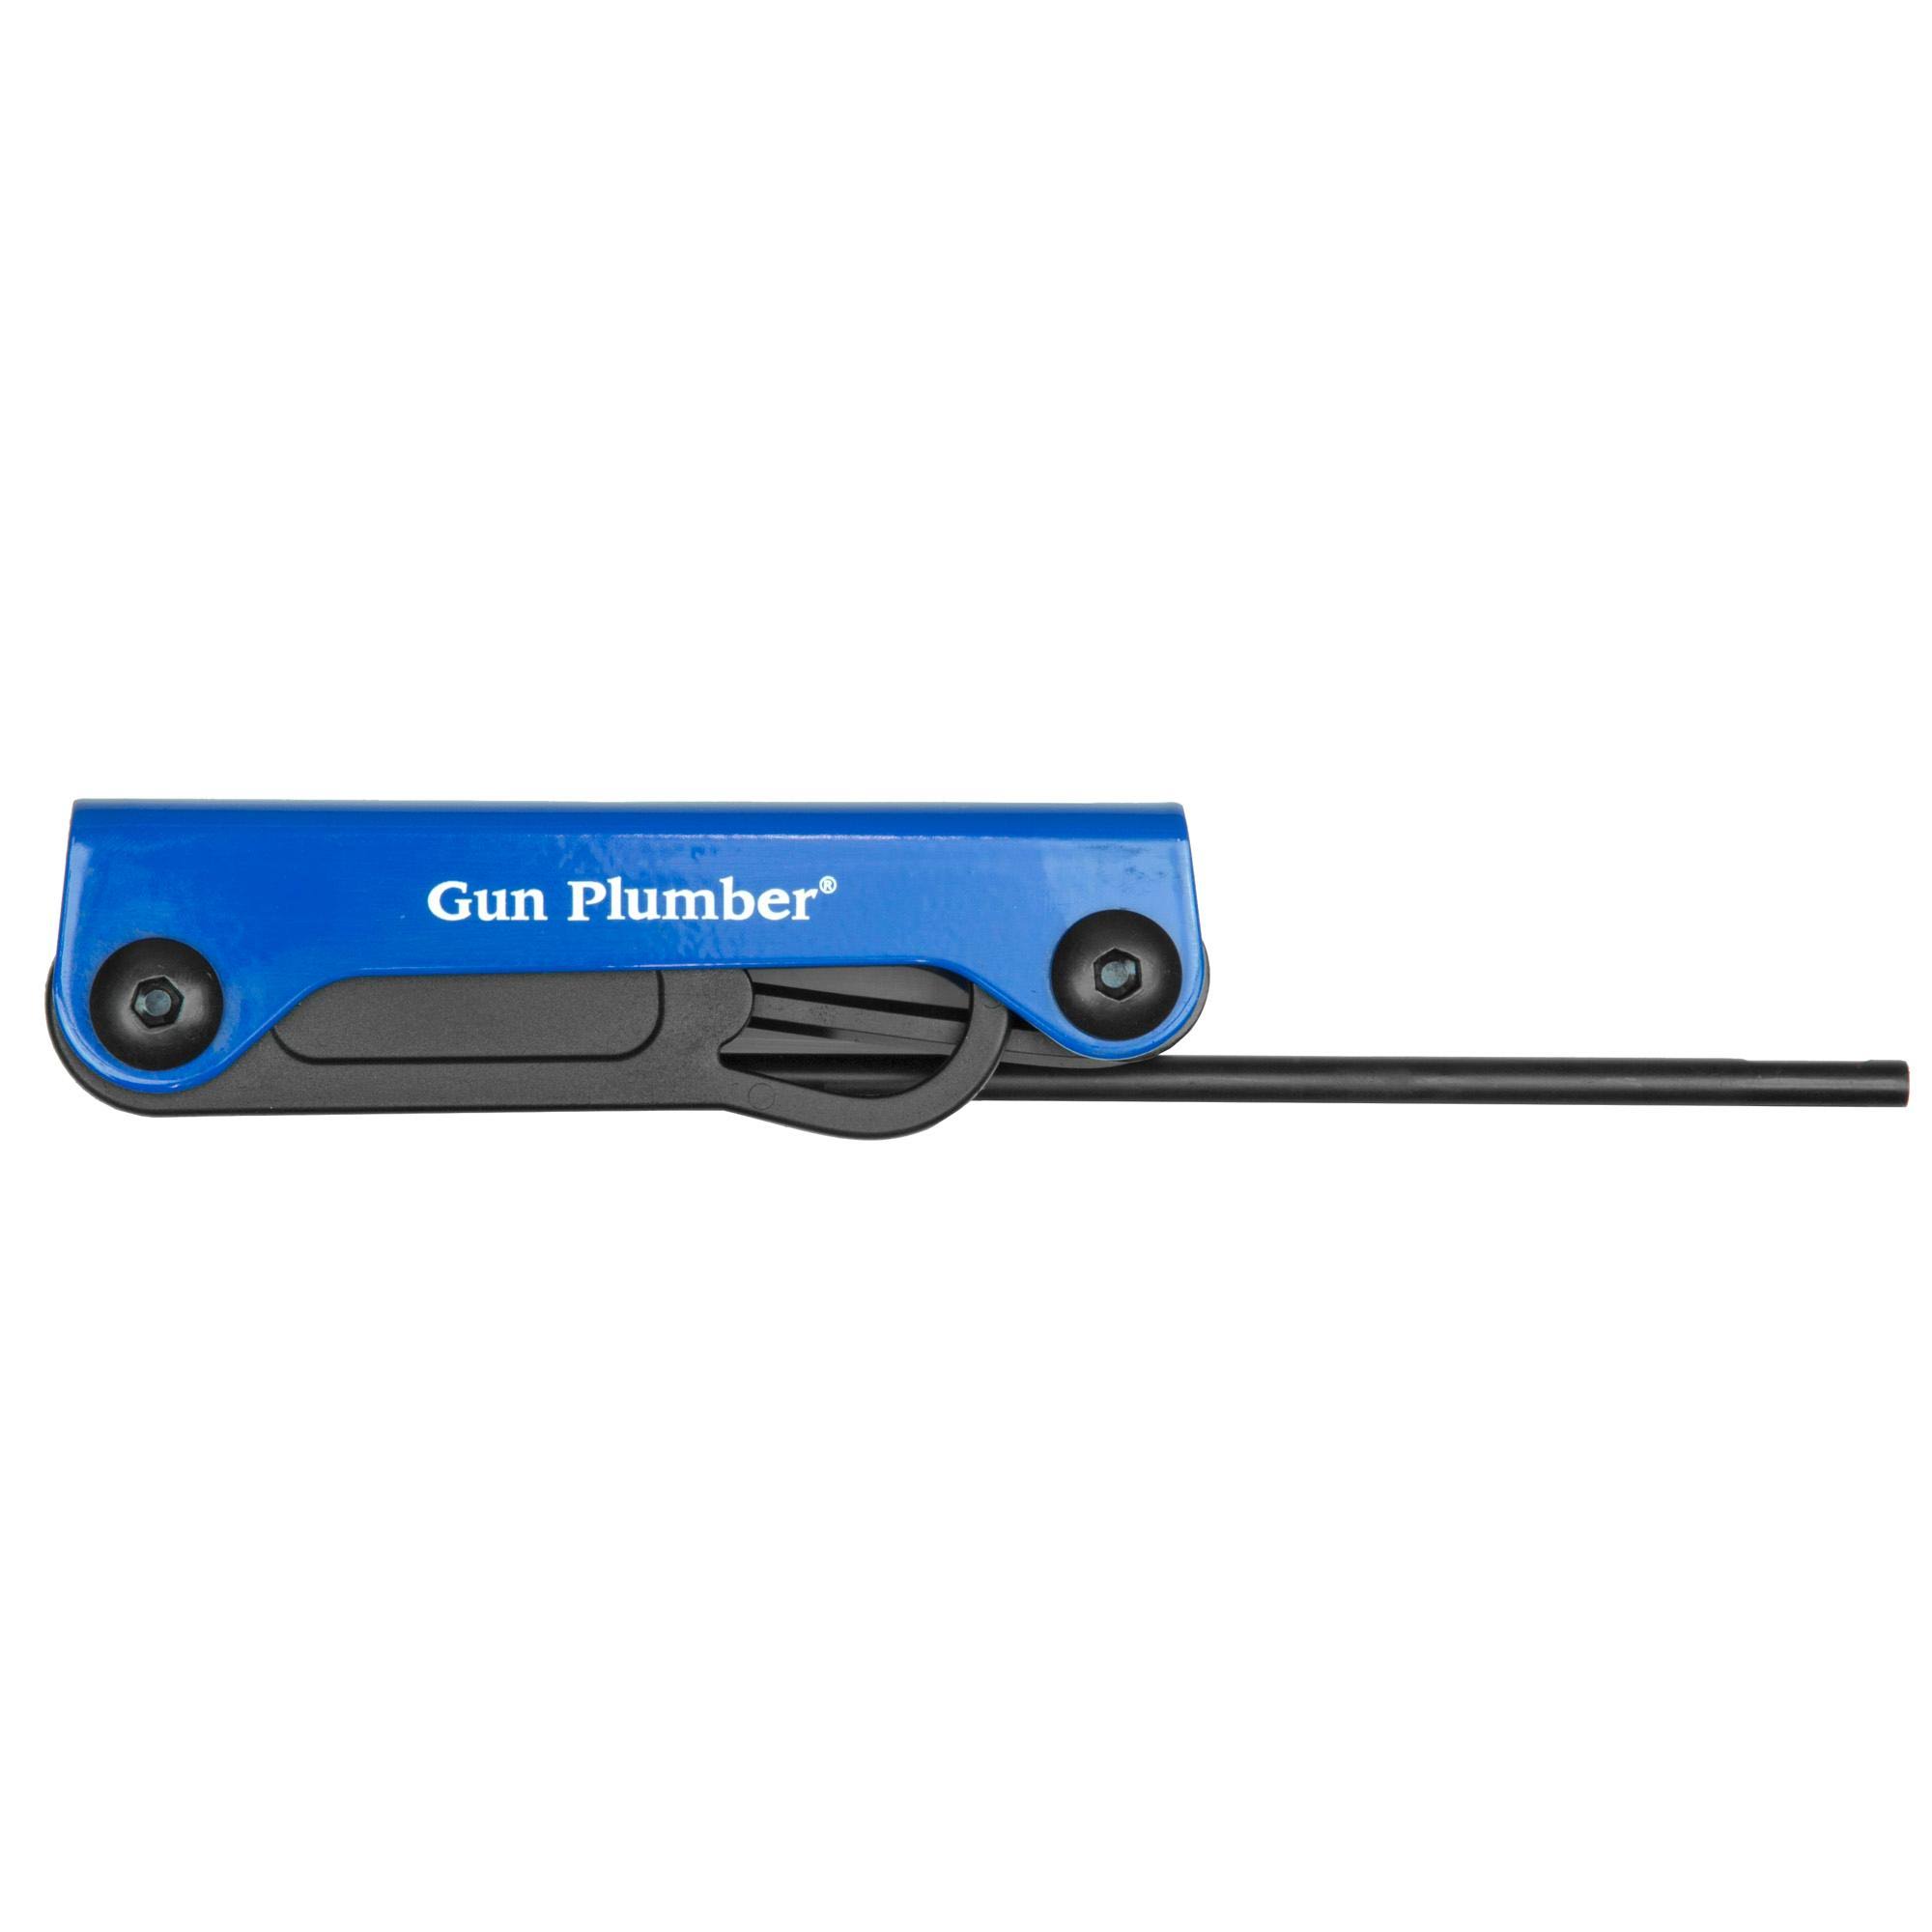 Birchwood Casey 42003 B/C Gun Plumber Folding Multi-Tool